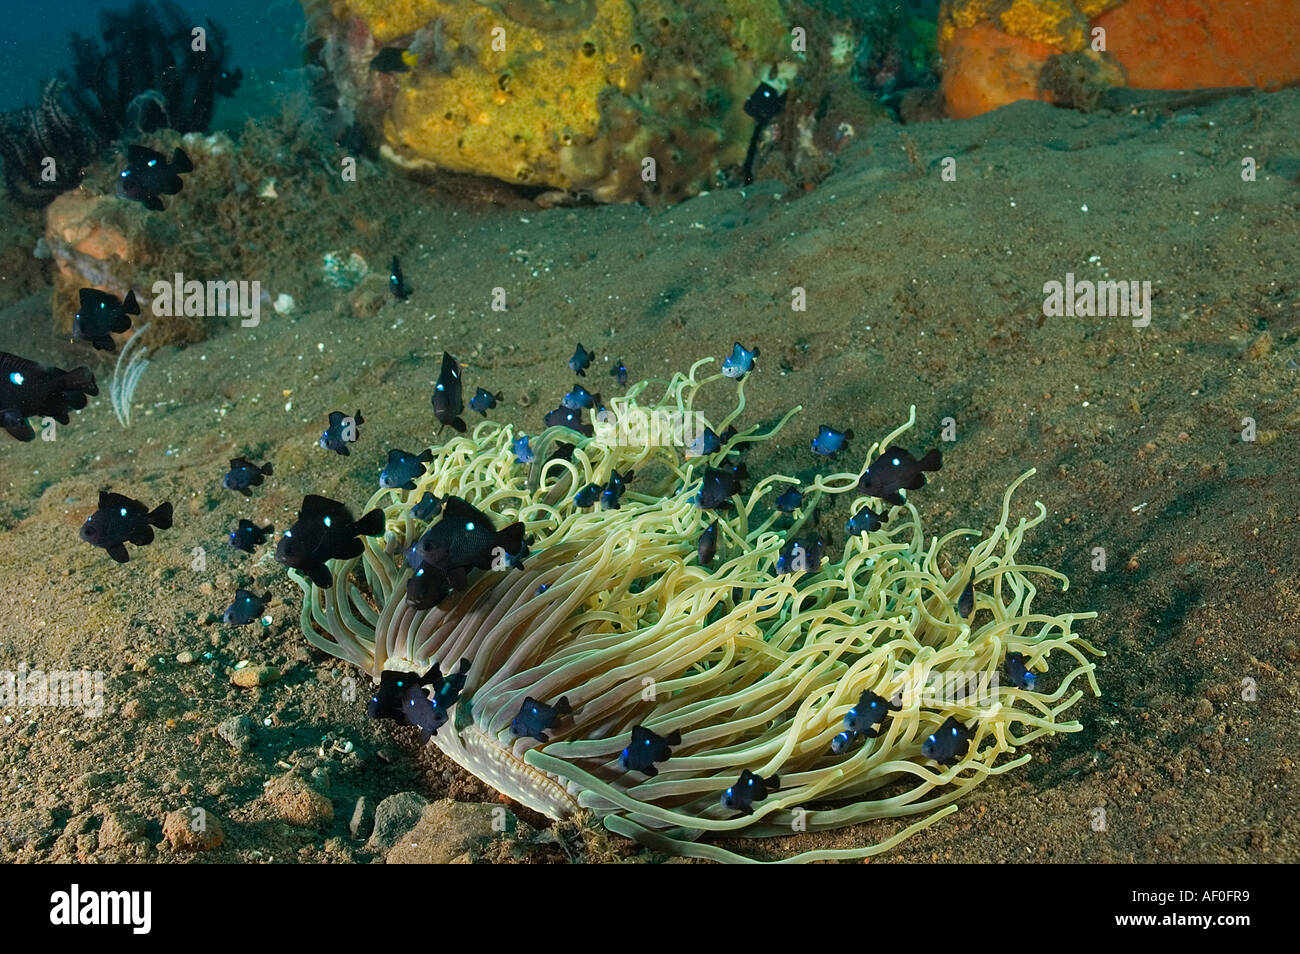 Three spot damselfishes, Dascyllus trimaculatus, in an anemone, Heteractis crispa, Bali Indonesia. Stock Photo